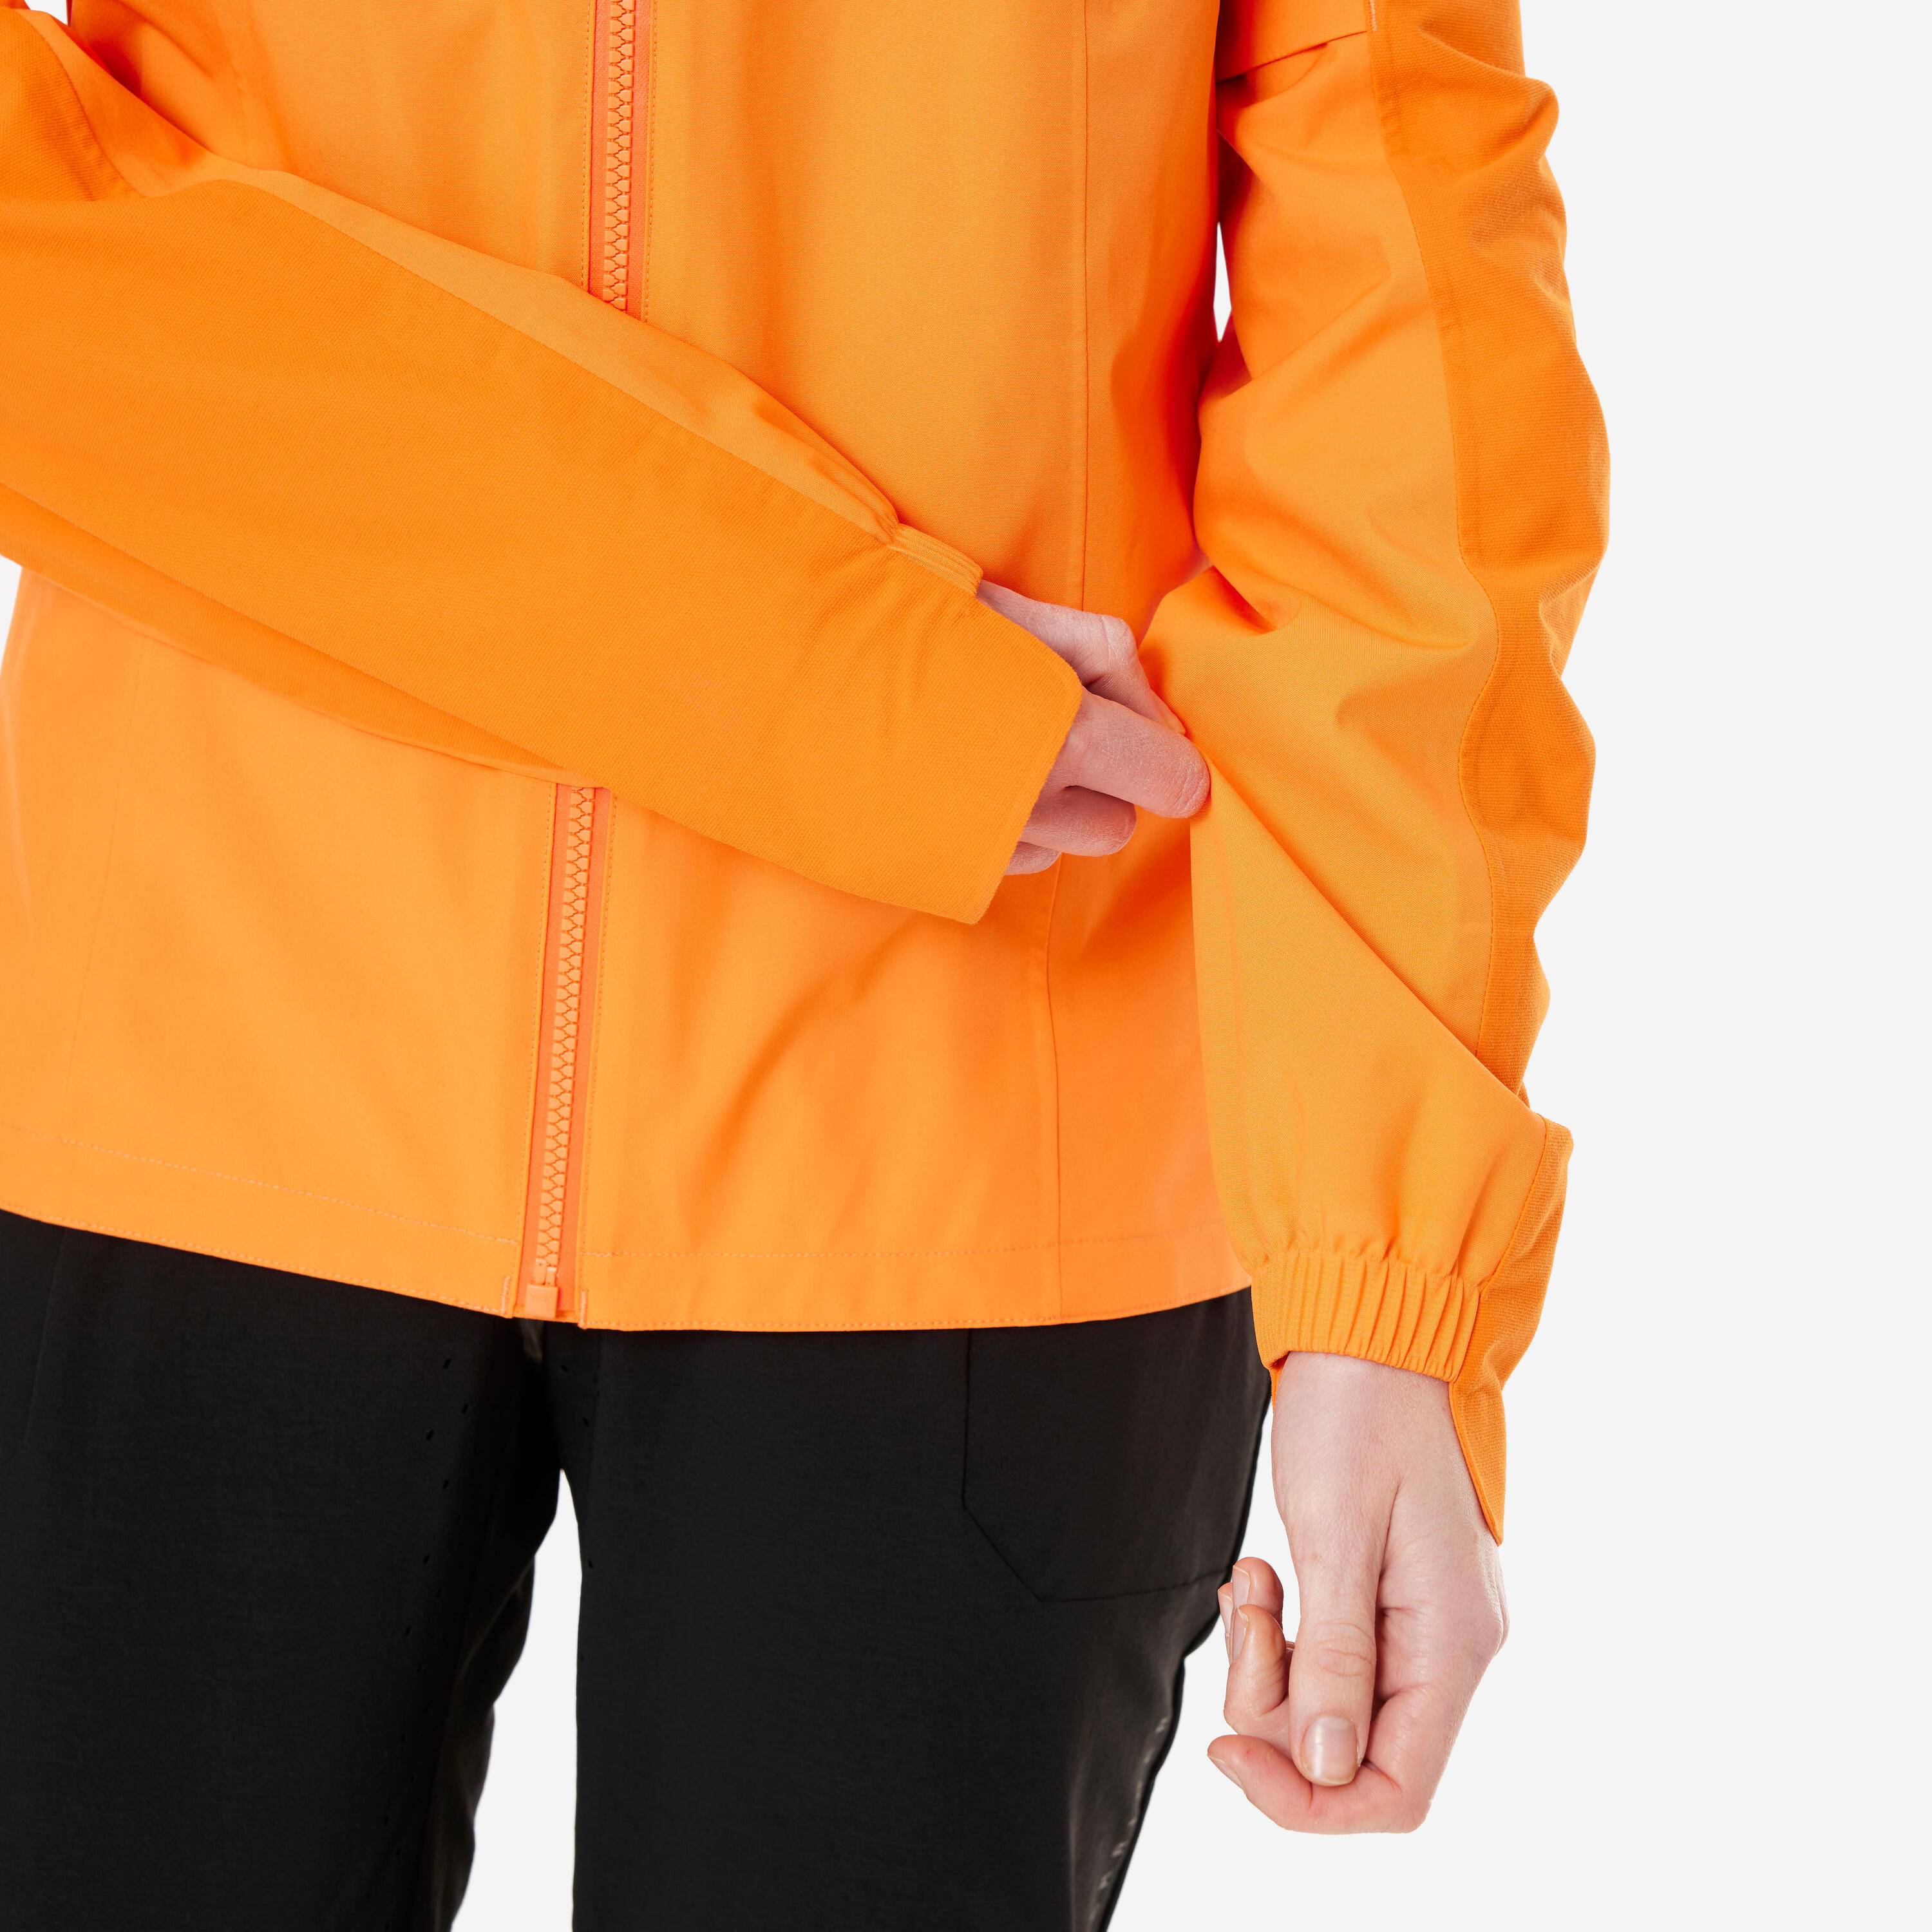 Women's Mountain Biking Rainproof Jacket - Orange 9/10